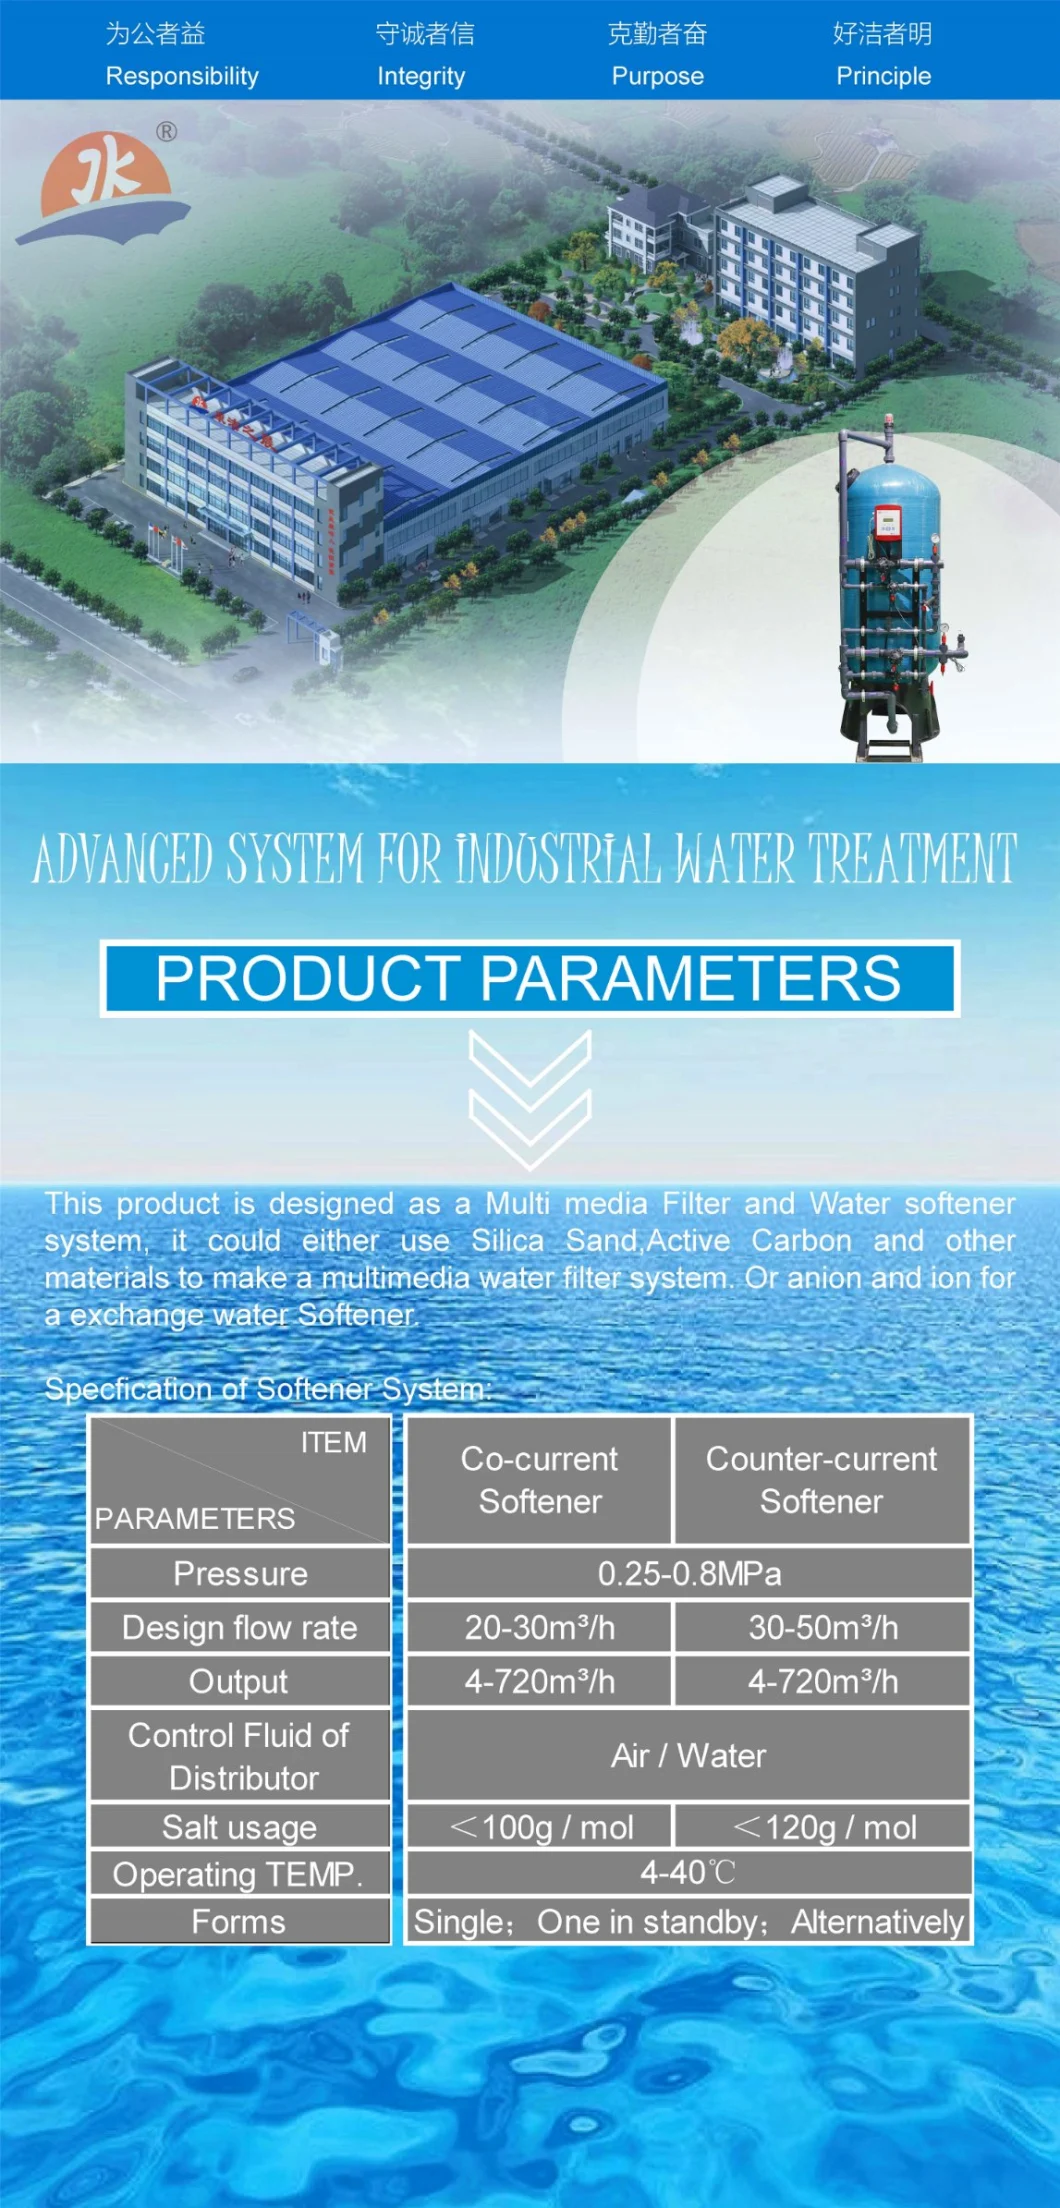 Jkmatic Jksd Water Multi-Media Filter and Softener with Pressure Tanks for Water Softener